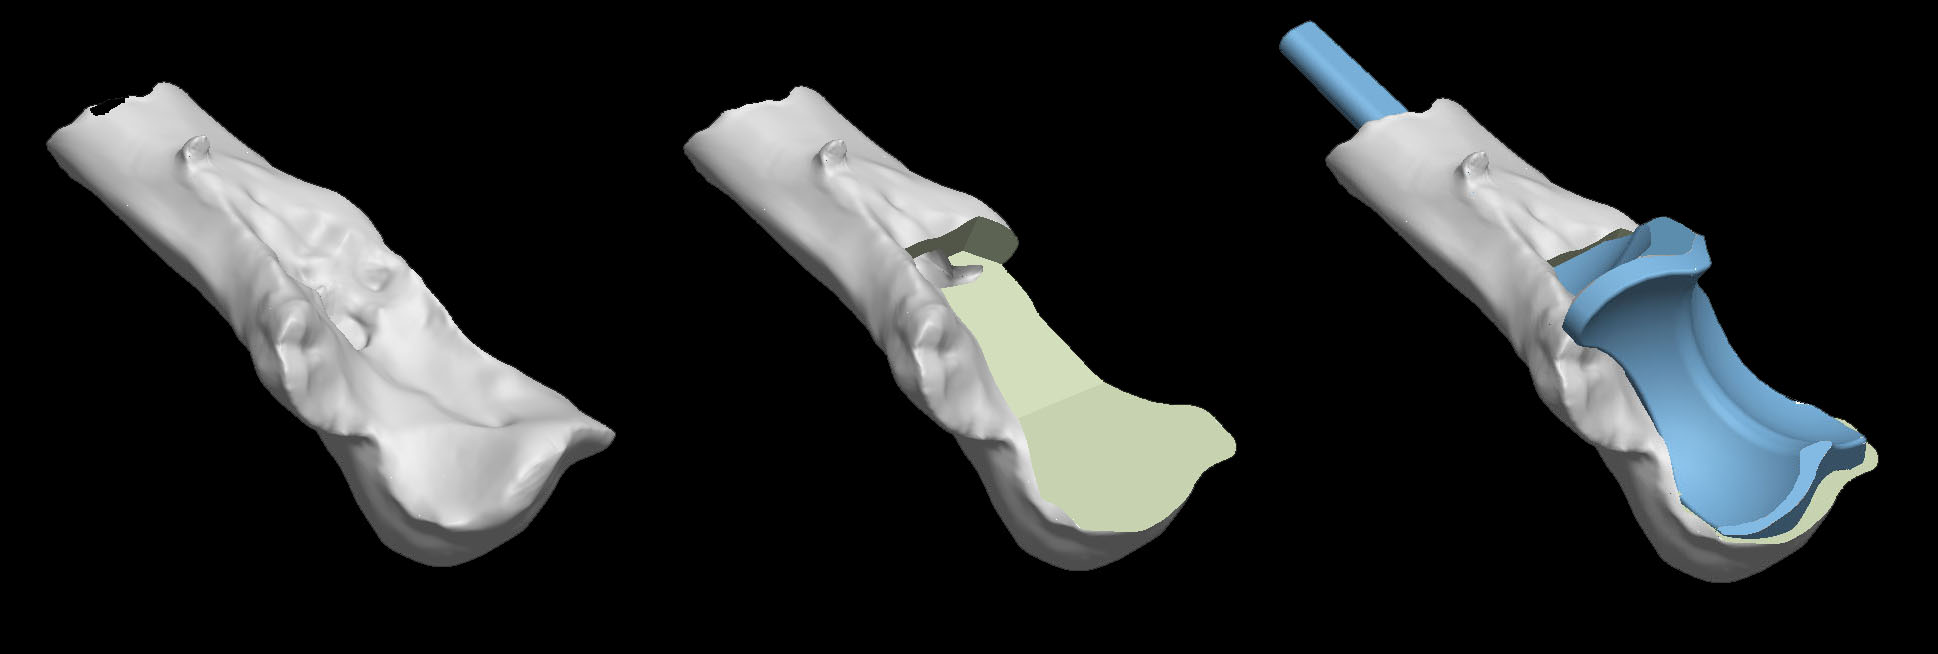 Pre-op 3D CT reconstruction